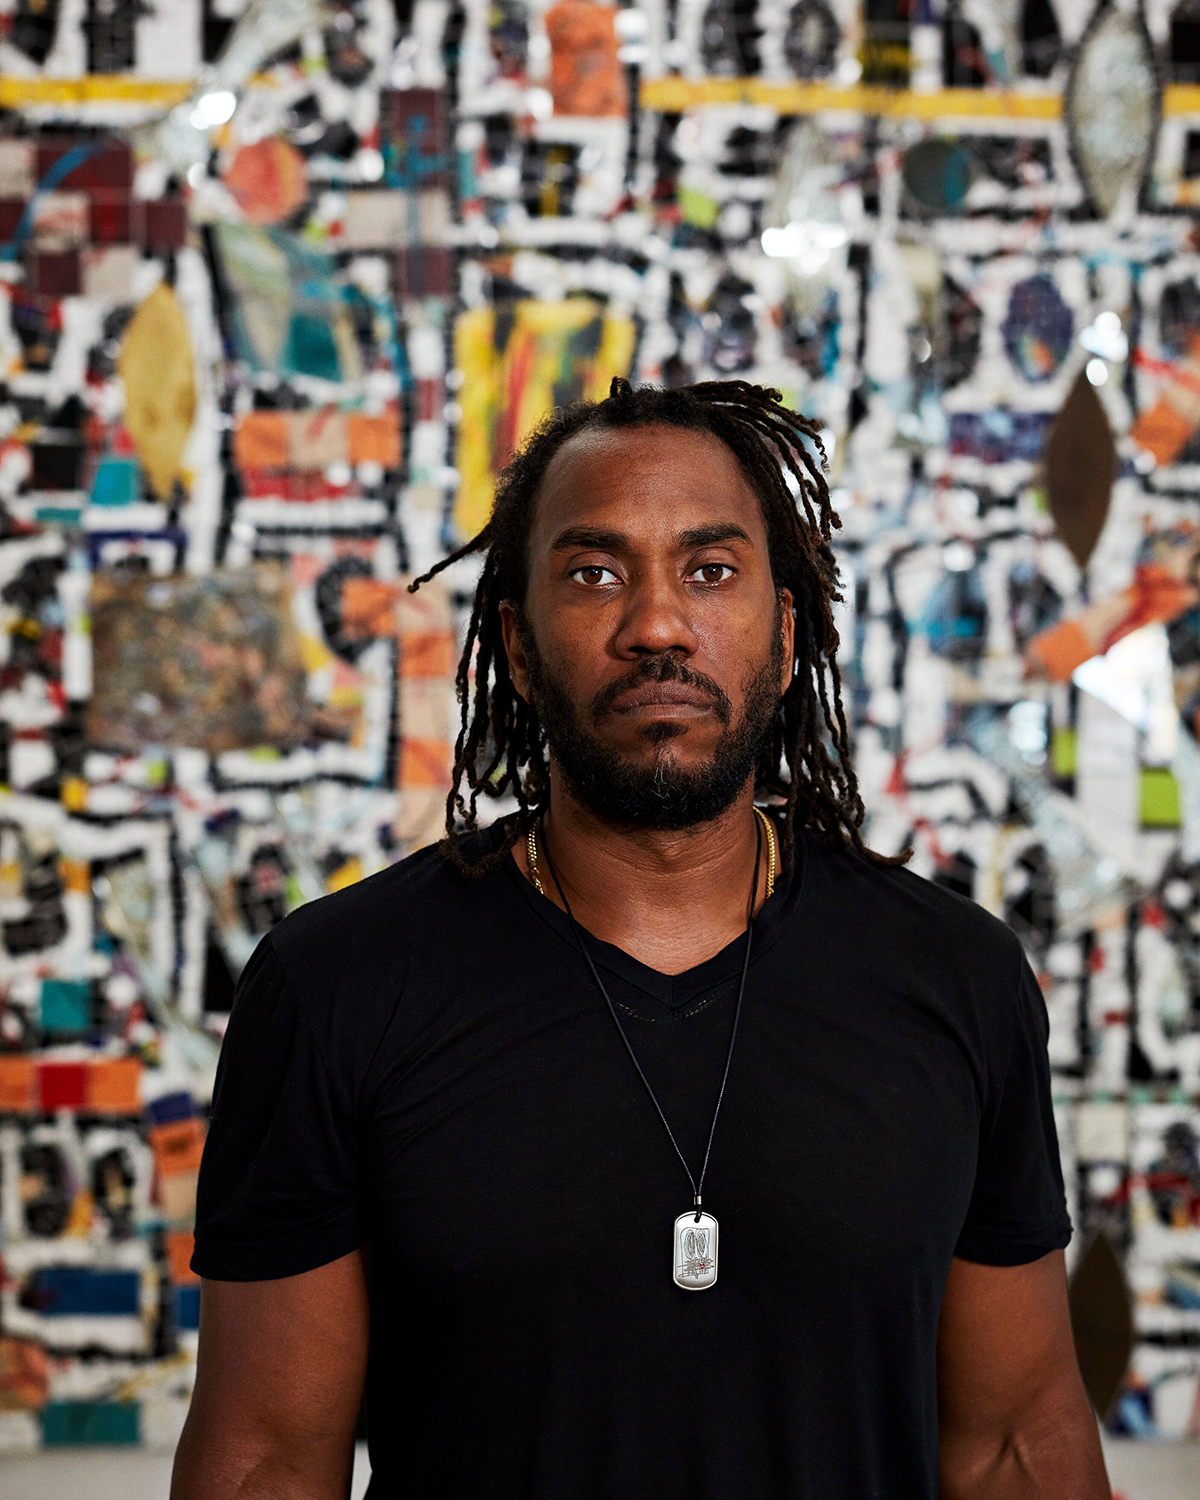 American artist Rashid Johnson on searching for autonomy